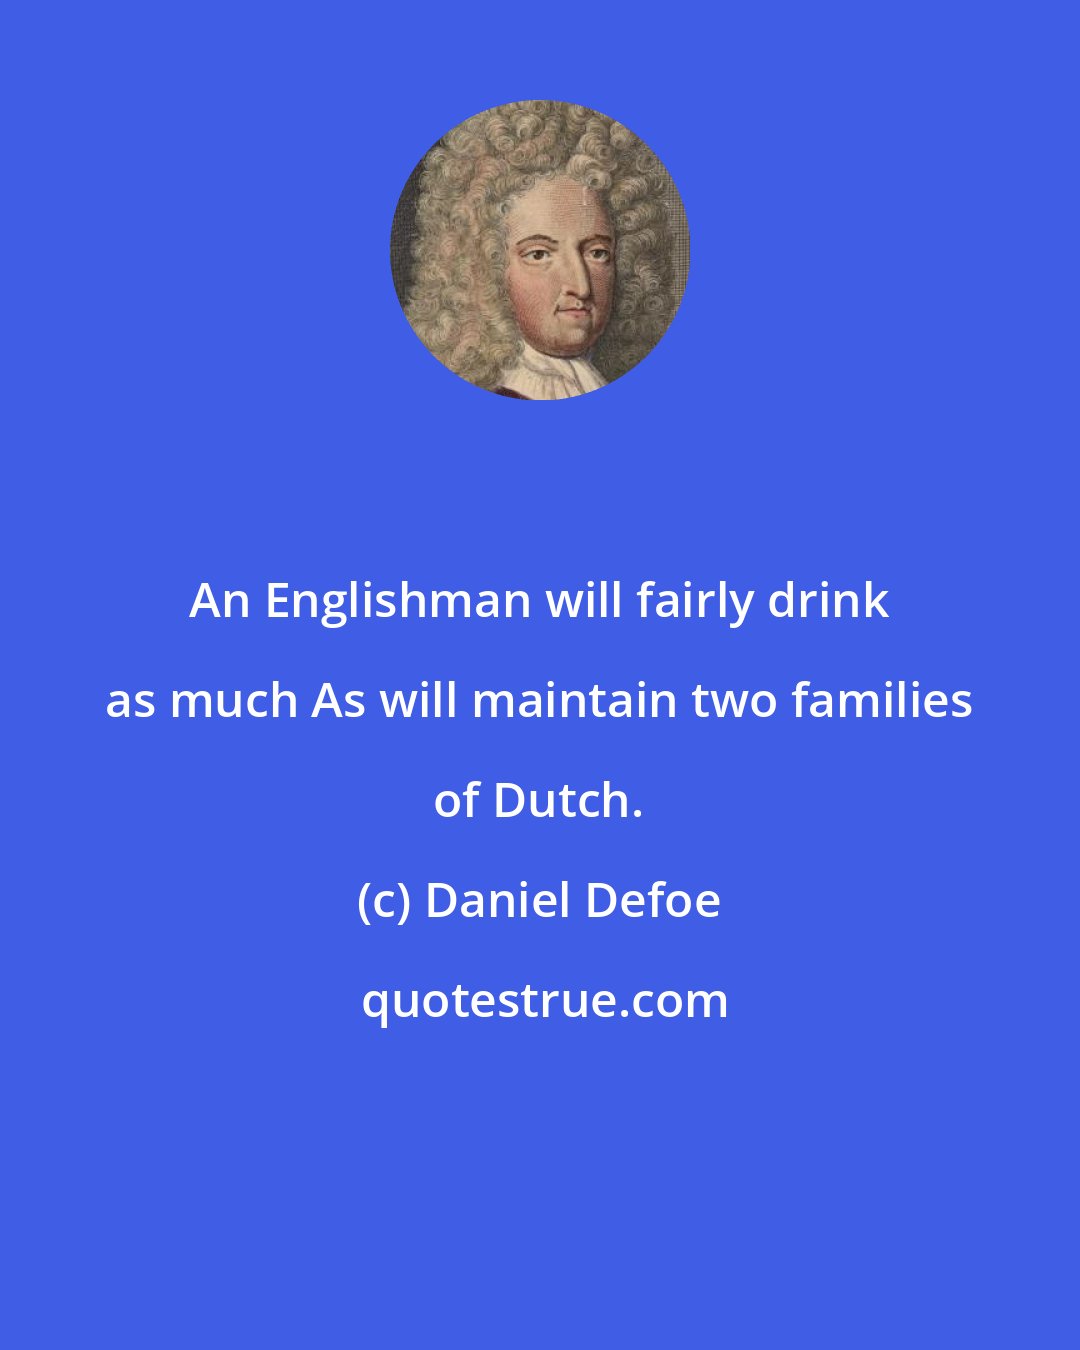 Daniel Defoe: An Englishman will fairly drink as much As will maintain two families of Dutch.